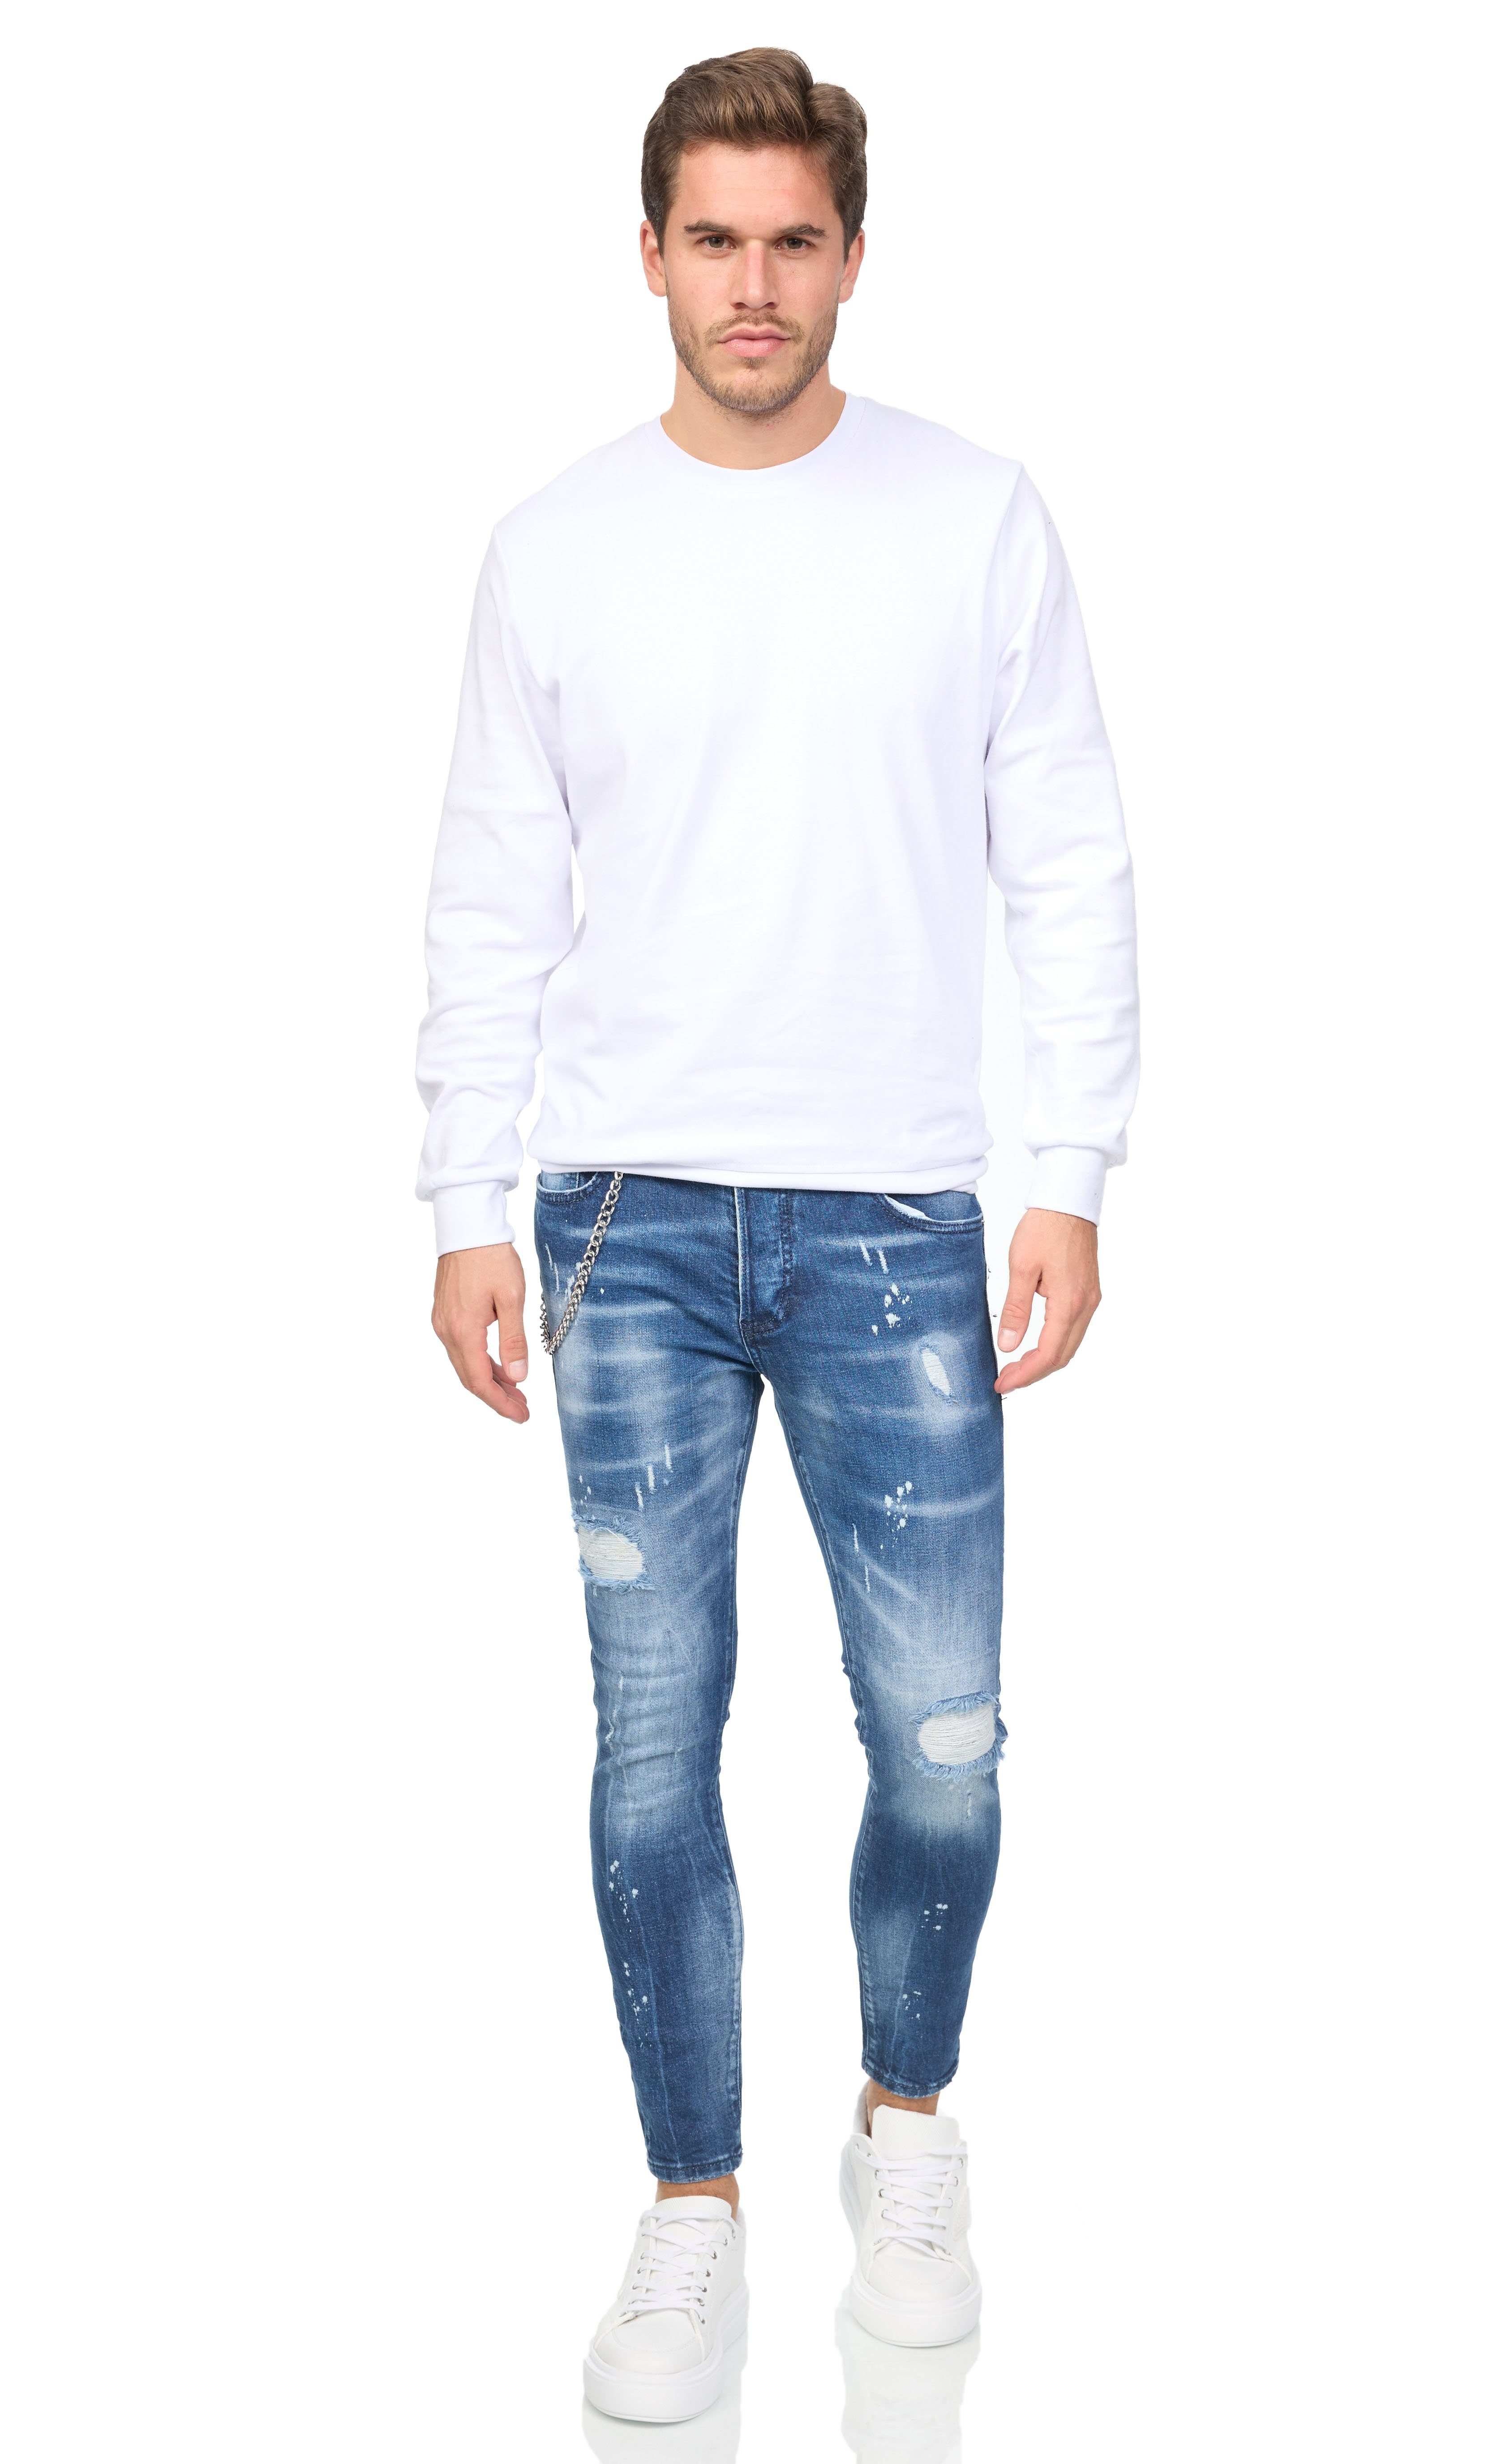 [3 Tage begrenzter Preis] Denim Distriqt Skinny-fit-Jeans Super stretchige Skinny 15668 Destroyed im DH-BI Look Jeans